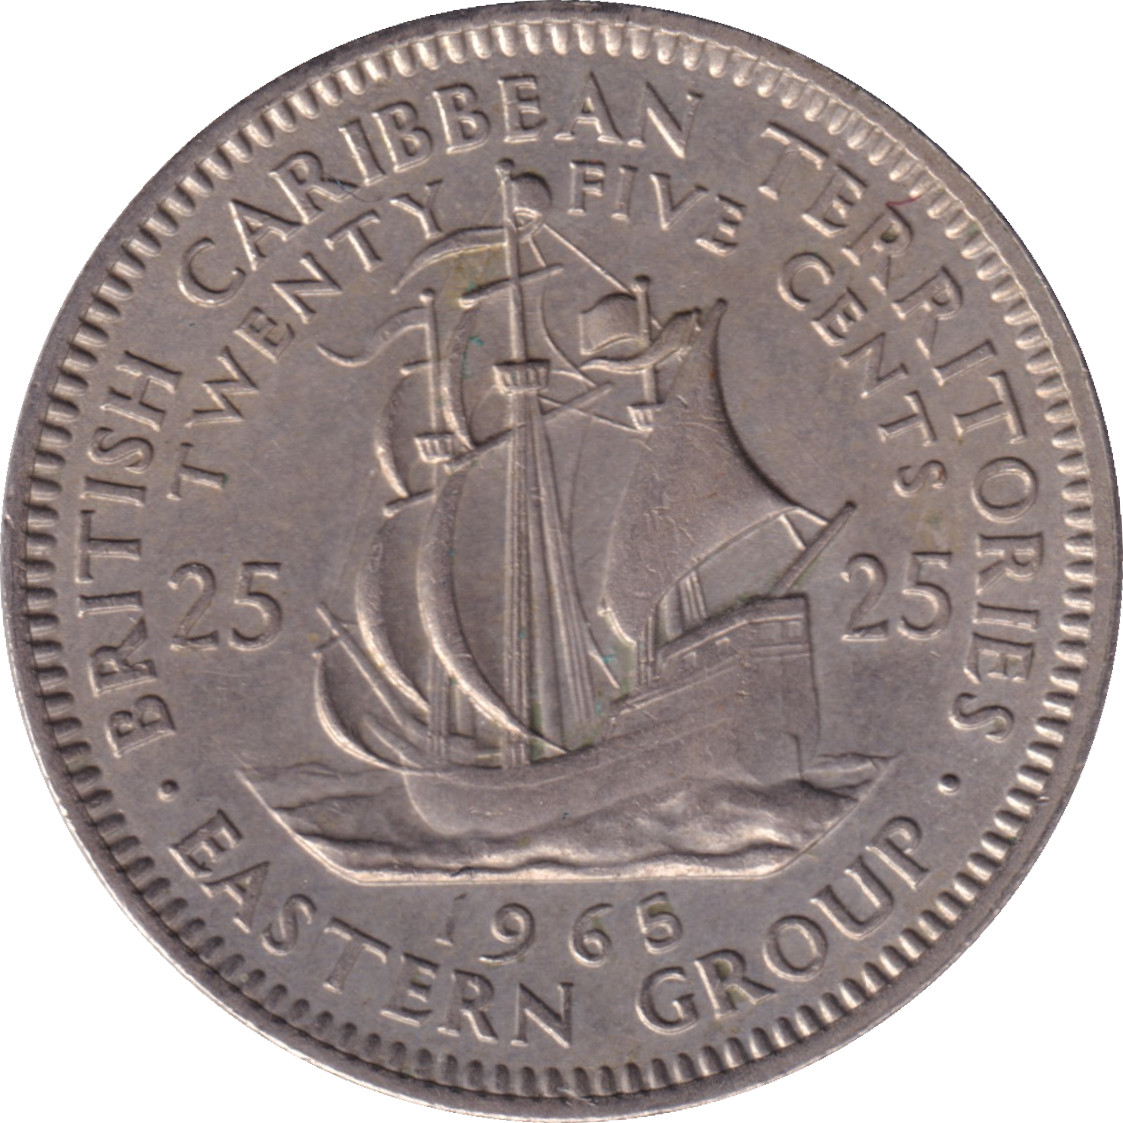 25 cents - Elizabeth II